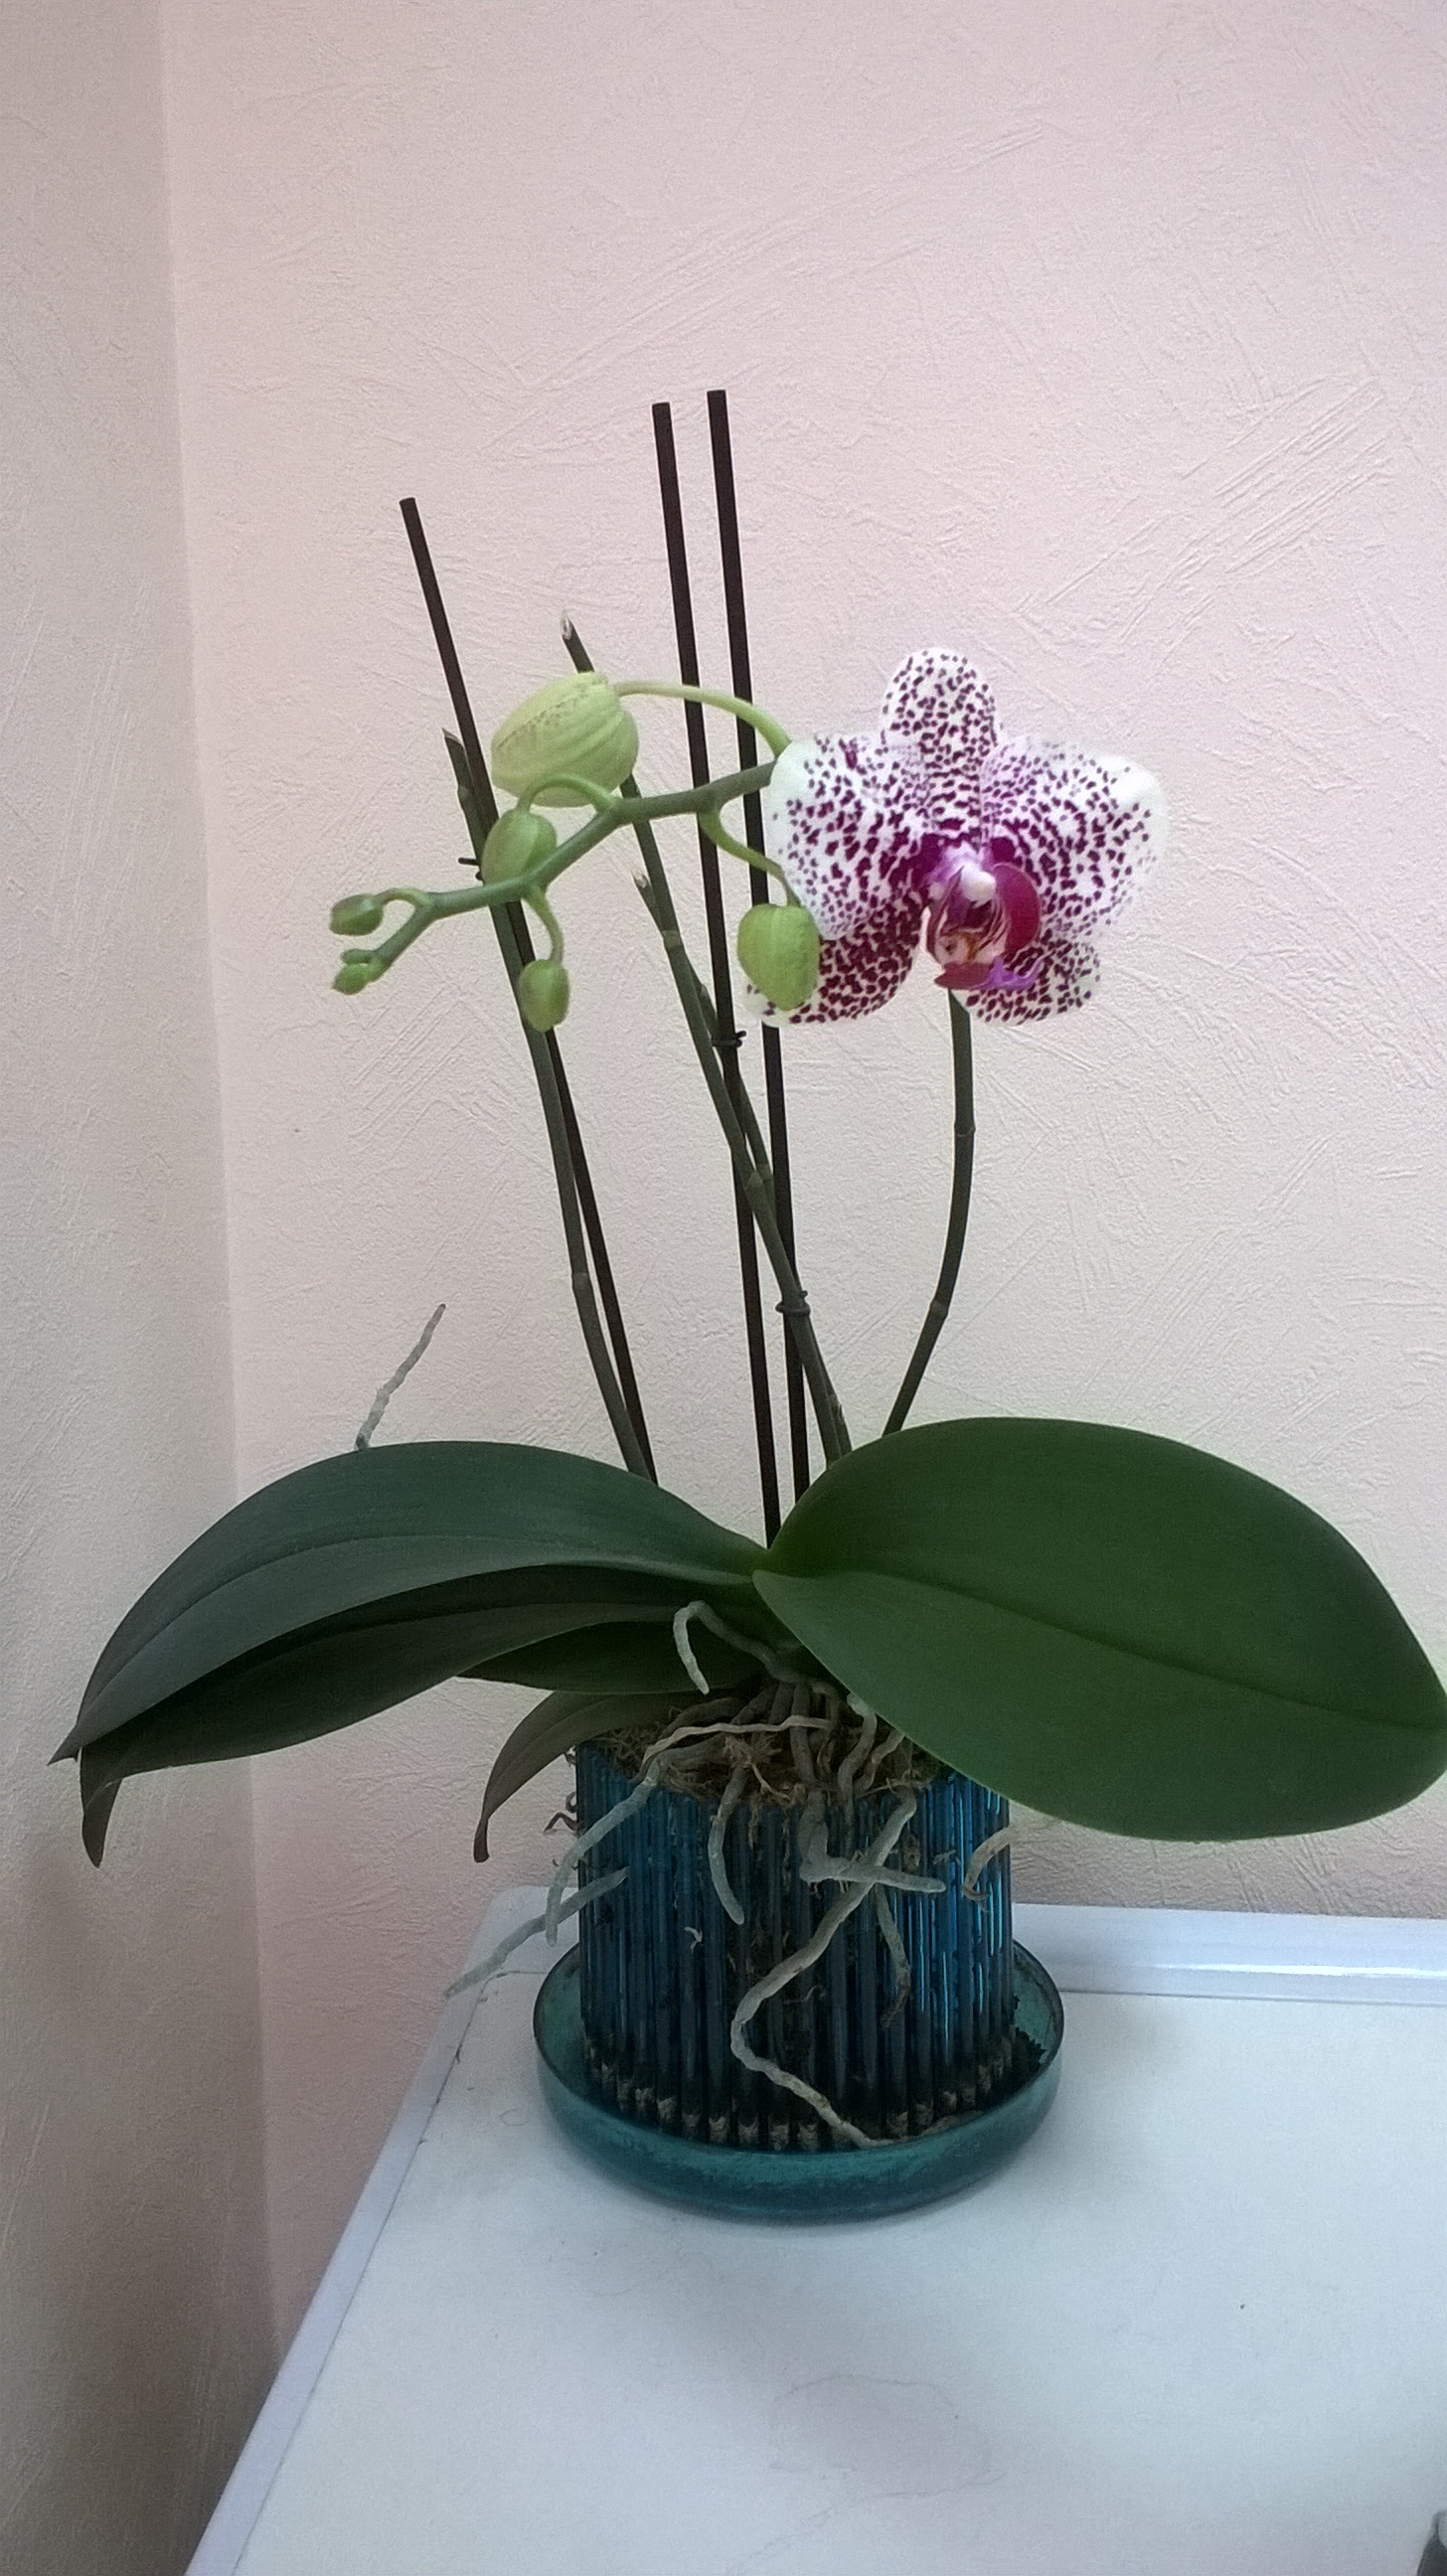 Начала цвести орхидея. Паучки орхидеи Камбрии. Фаленопсис Пьяценза. Орхидея отцвела. Орхидея фаленопсис цветение.